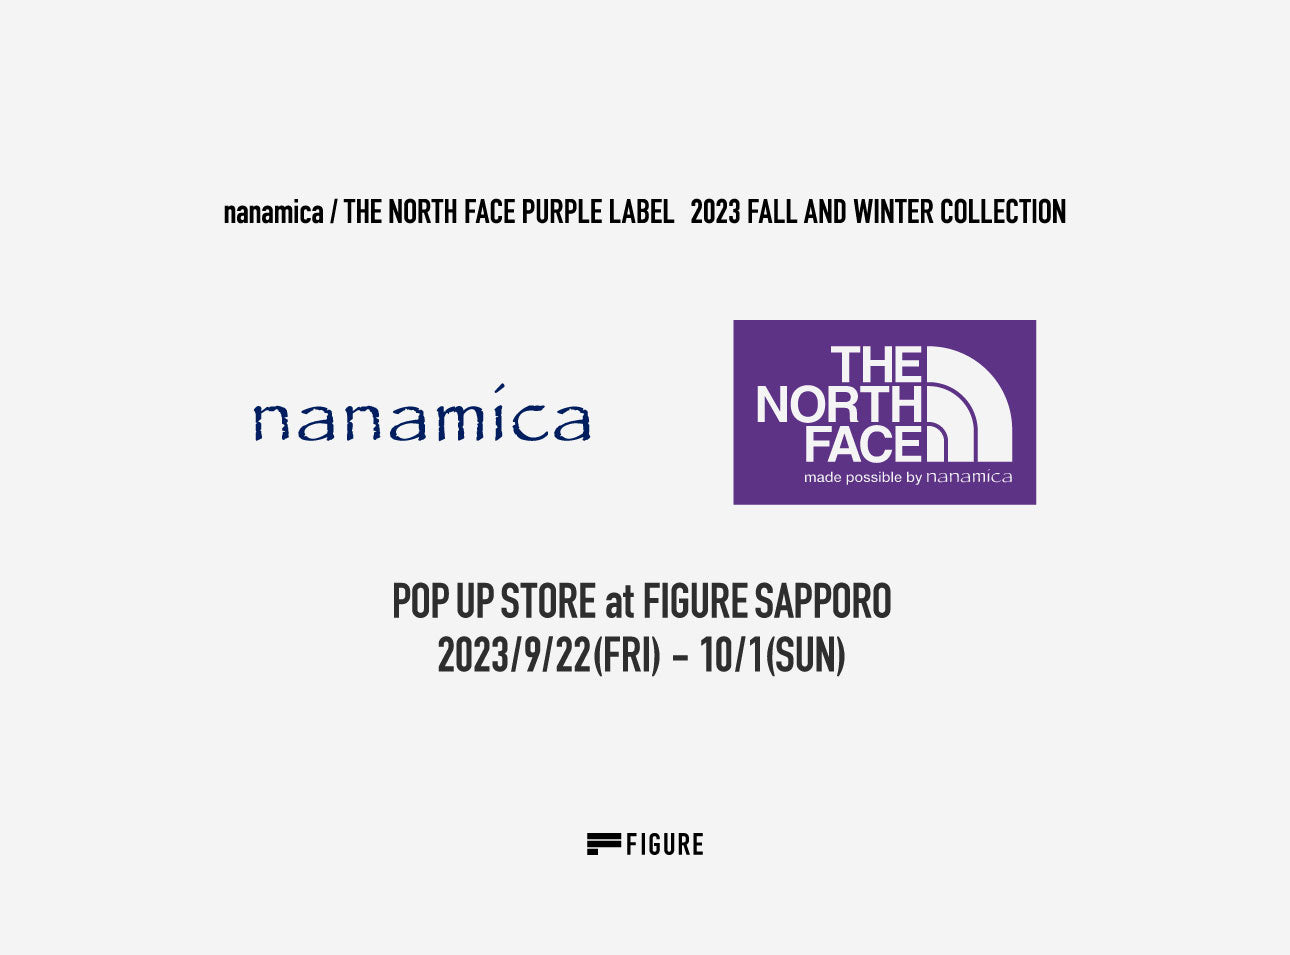 nanamica / THE NORTH FACE PURPLE LABEL POP UP STORE at FIGURE SAPPORO